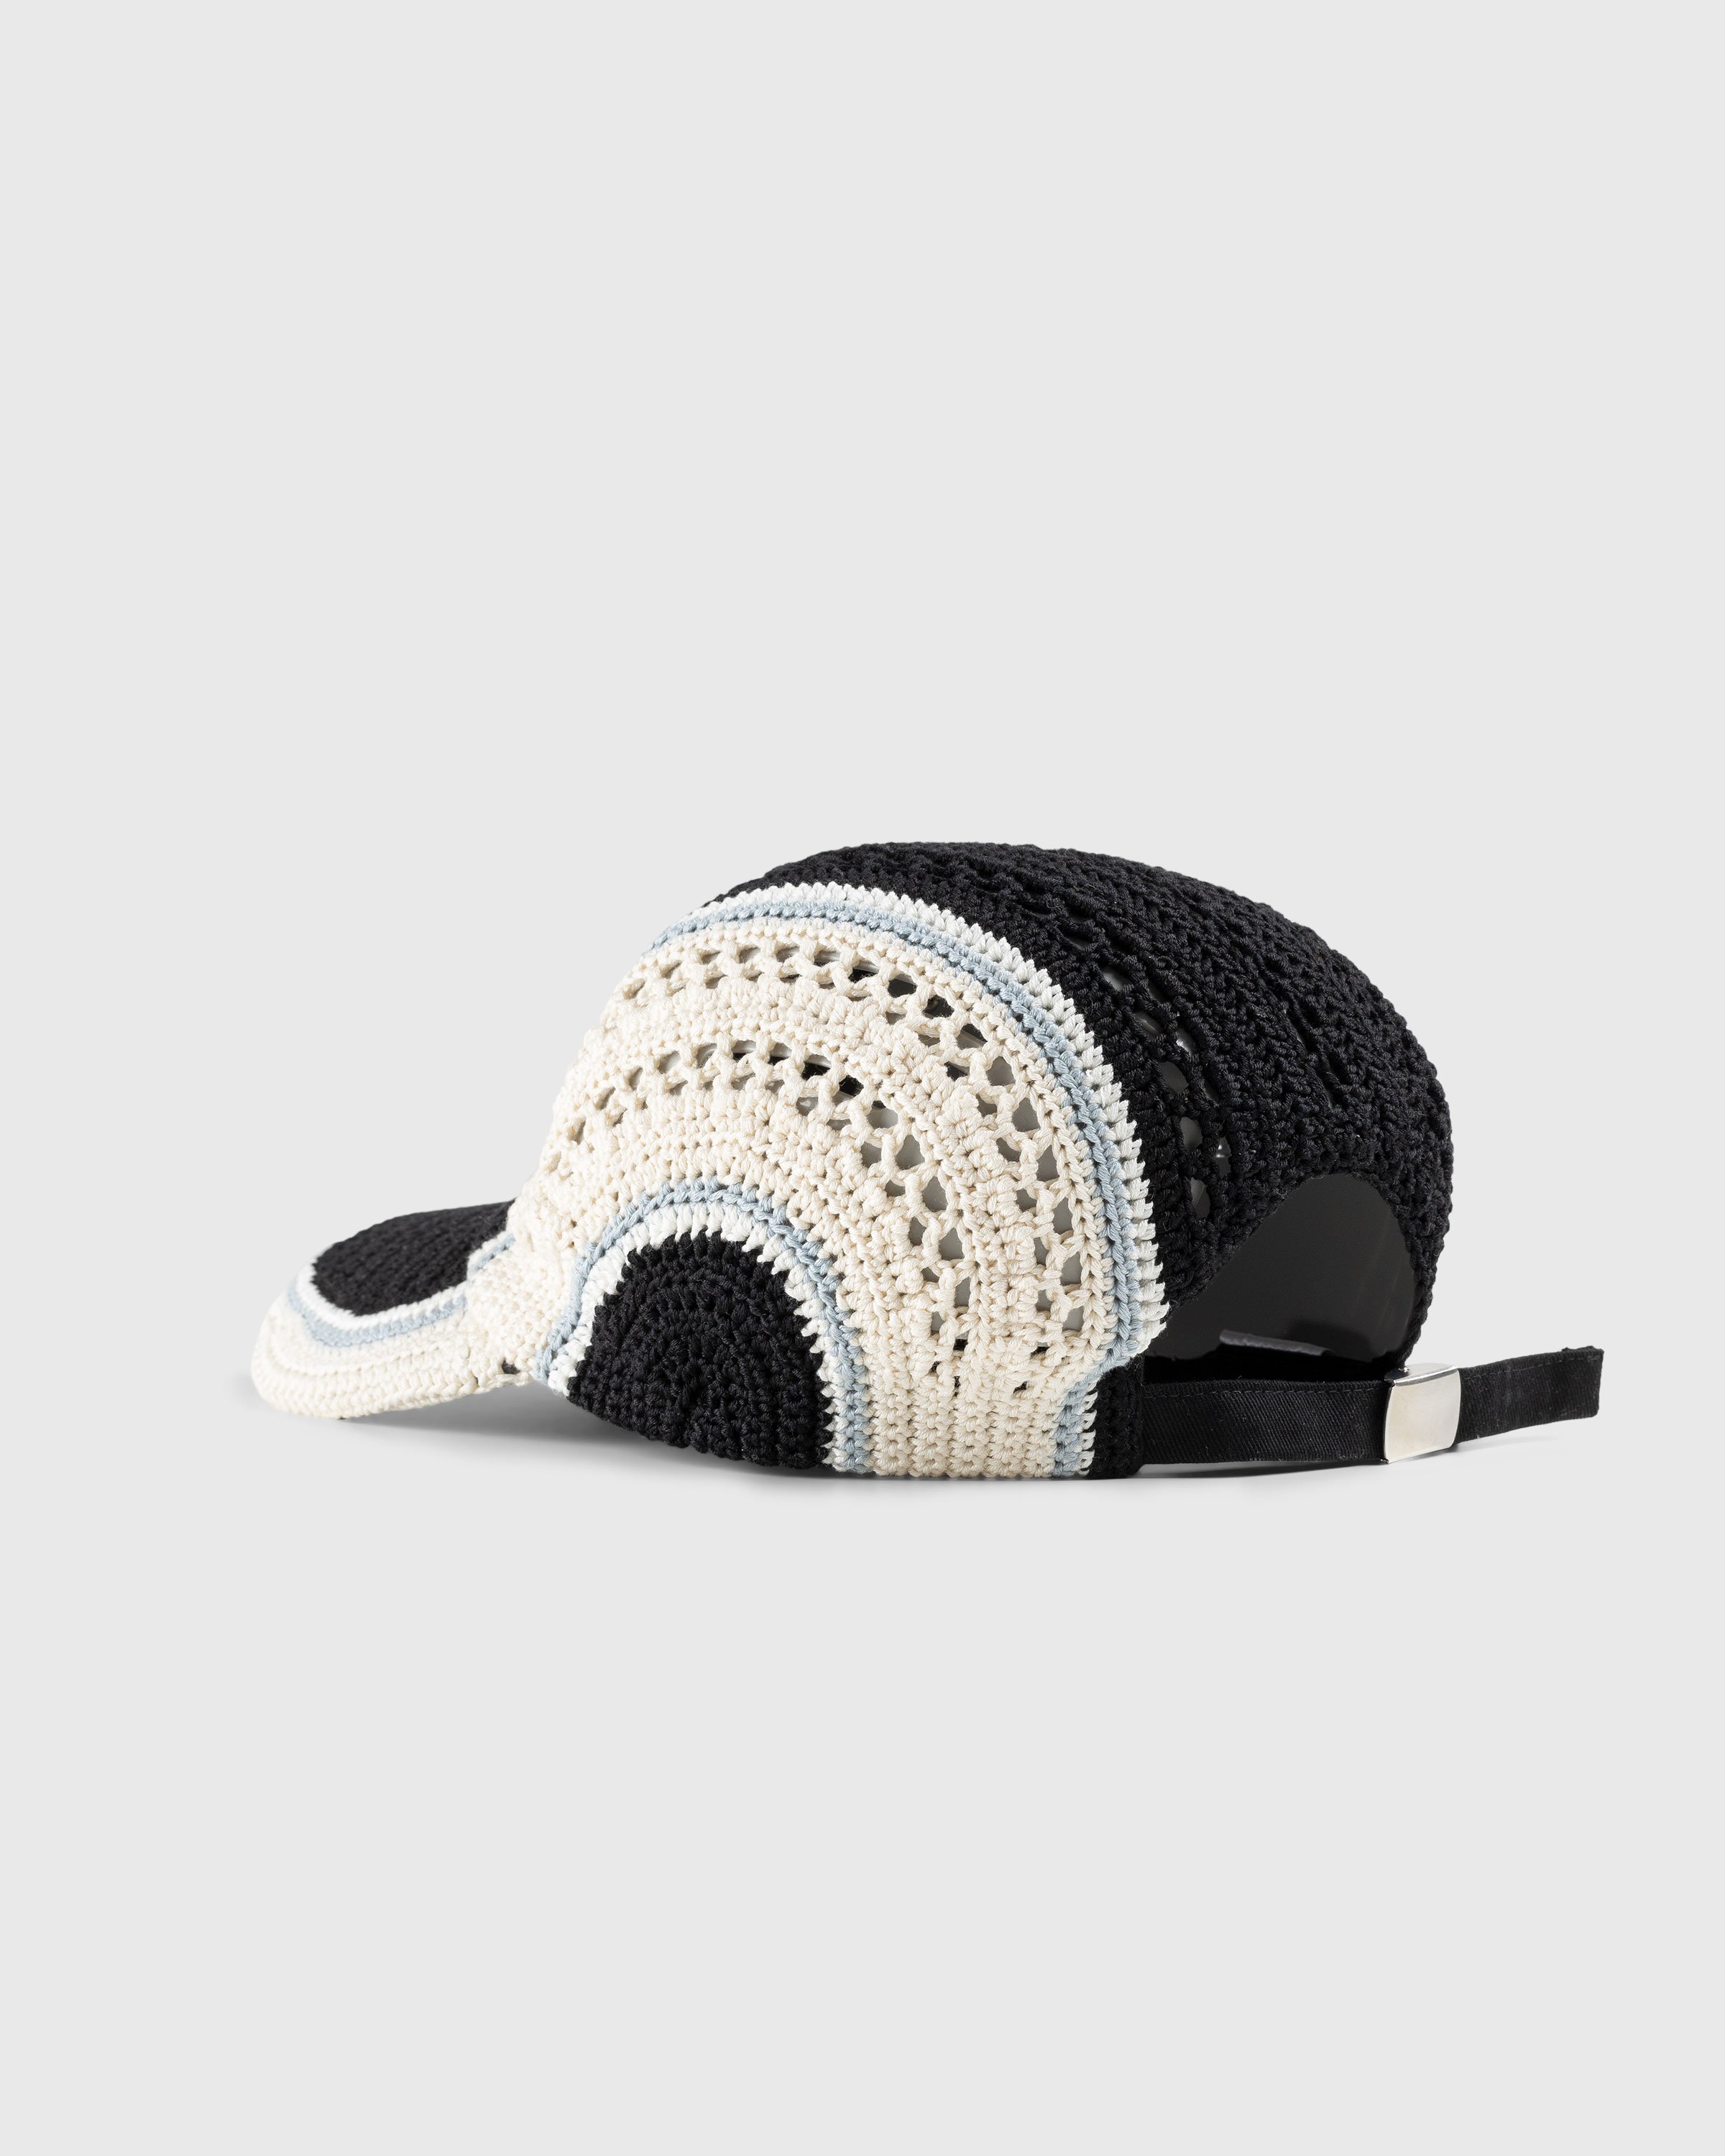 SSU - Crochet Baseball Cap Midnight Drive Black - Accessories - Black - Image 3